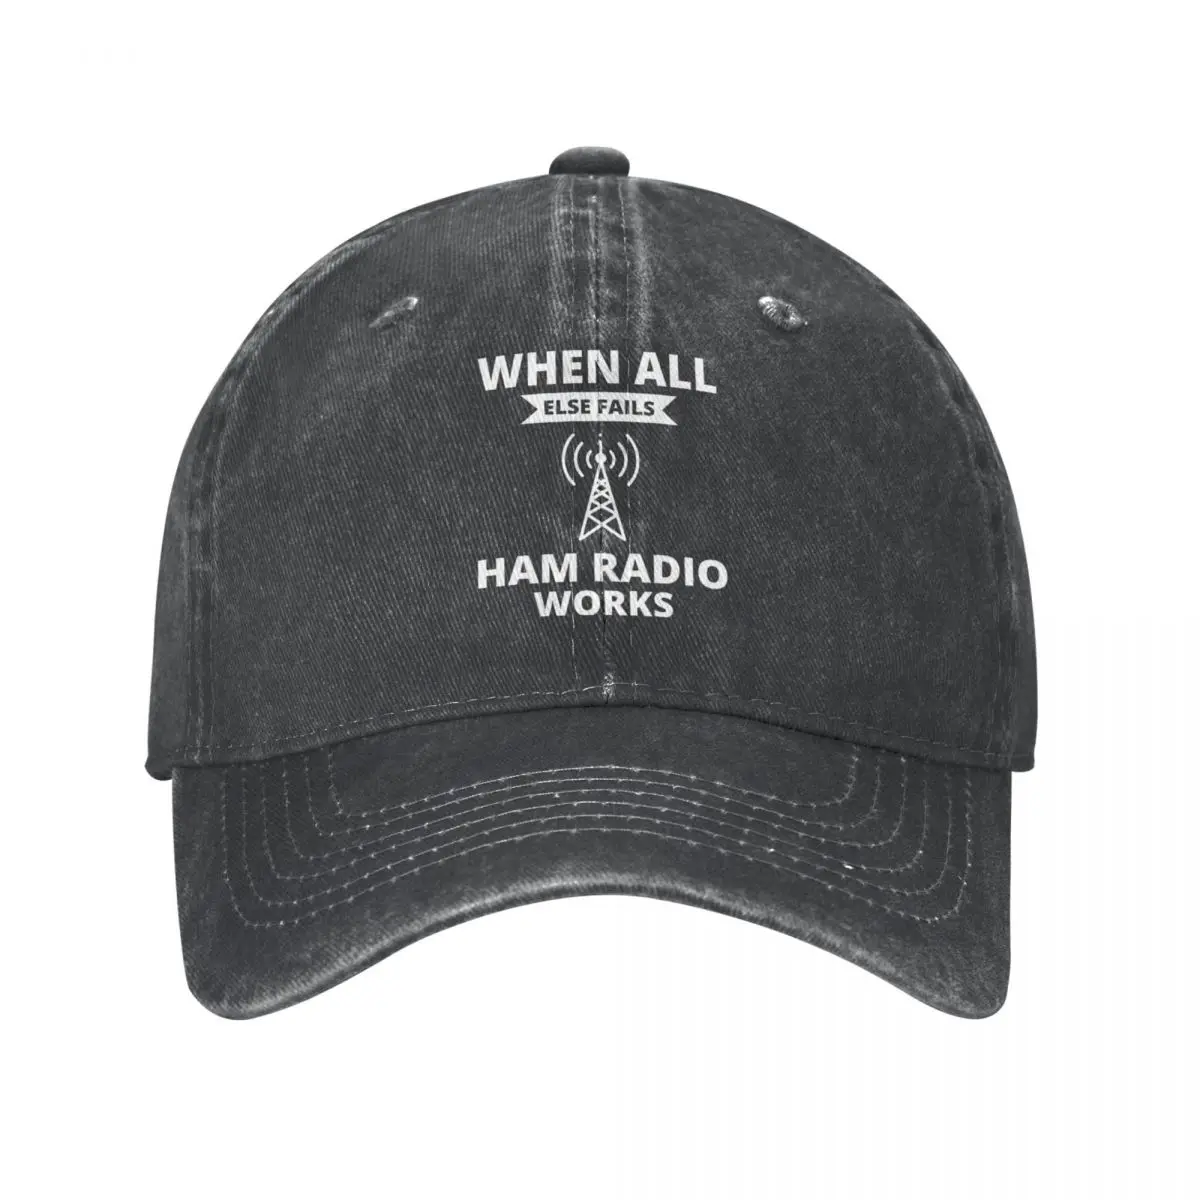 

Amateur Ham Radio Operator Humor Gift Unisex Style Baseball Cap Distressed Denim Hats Cap Outdoor Activities Snapback Cap